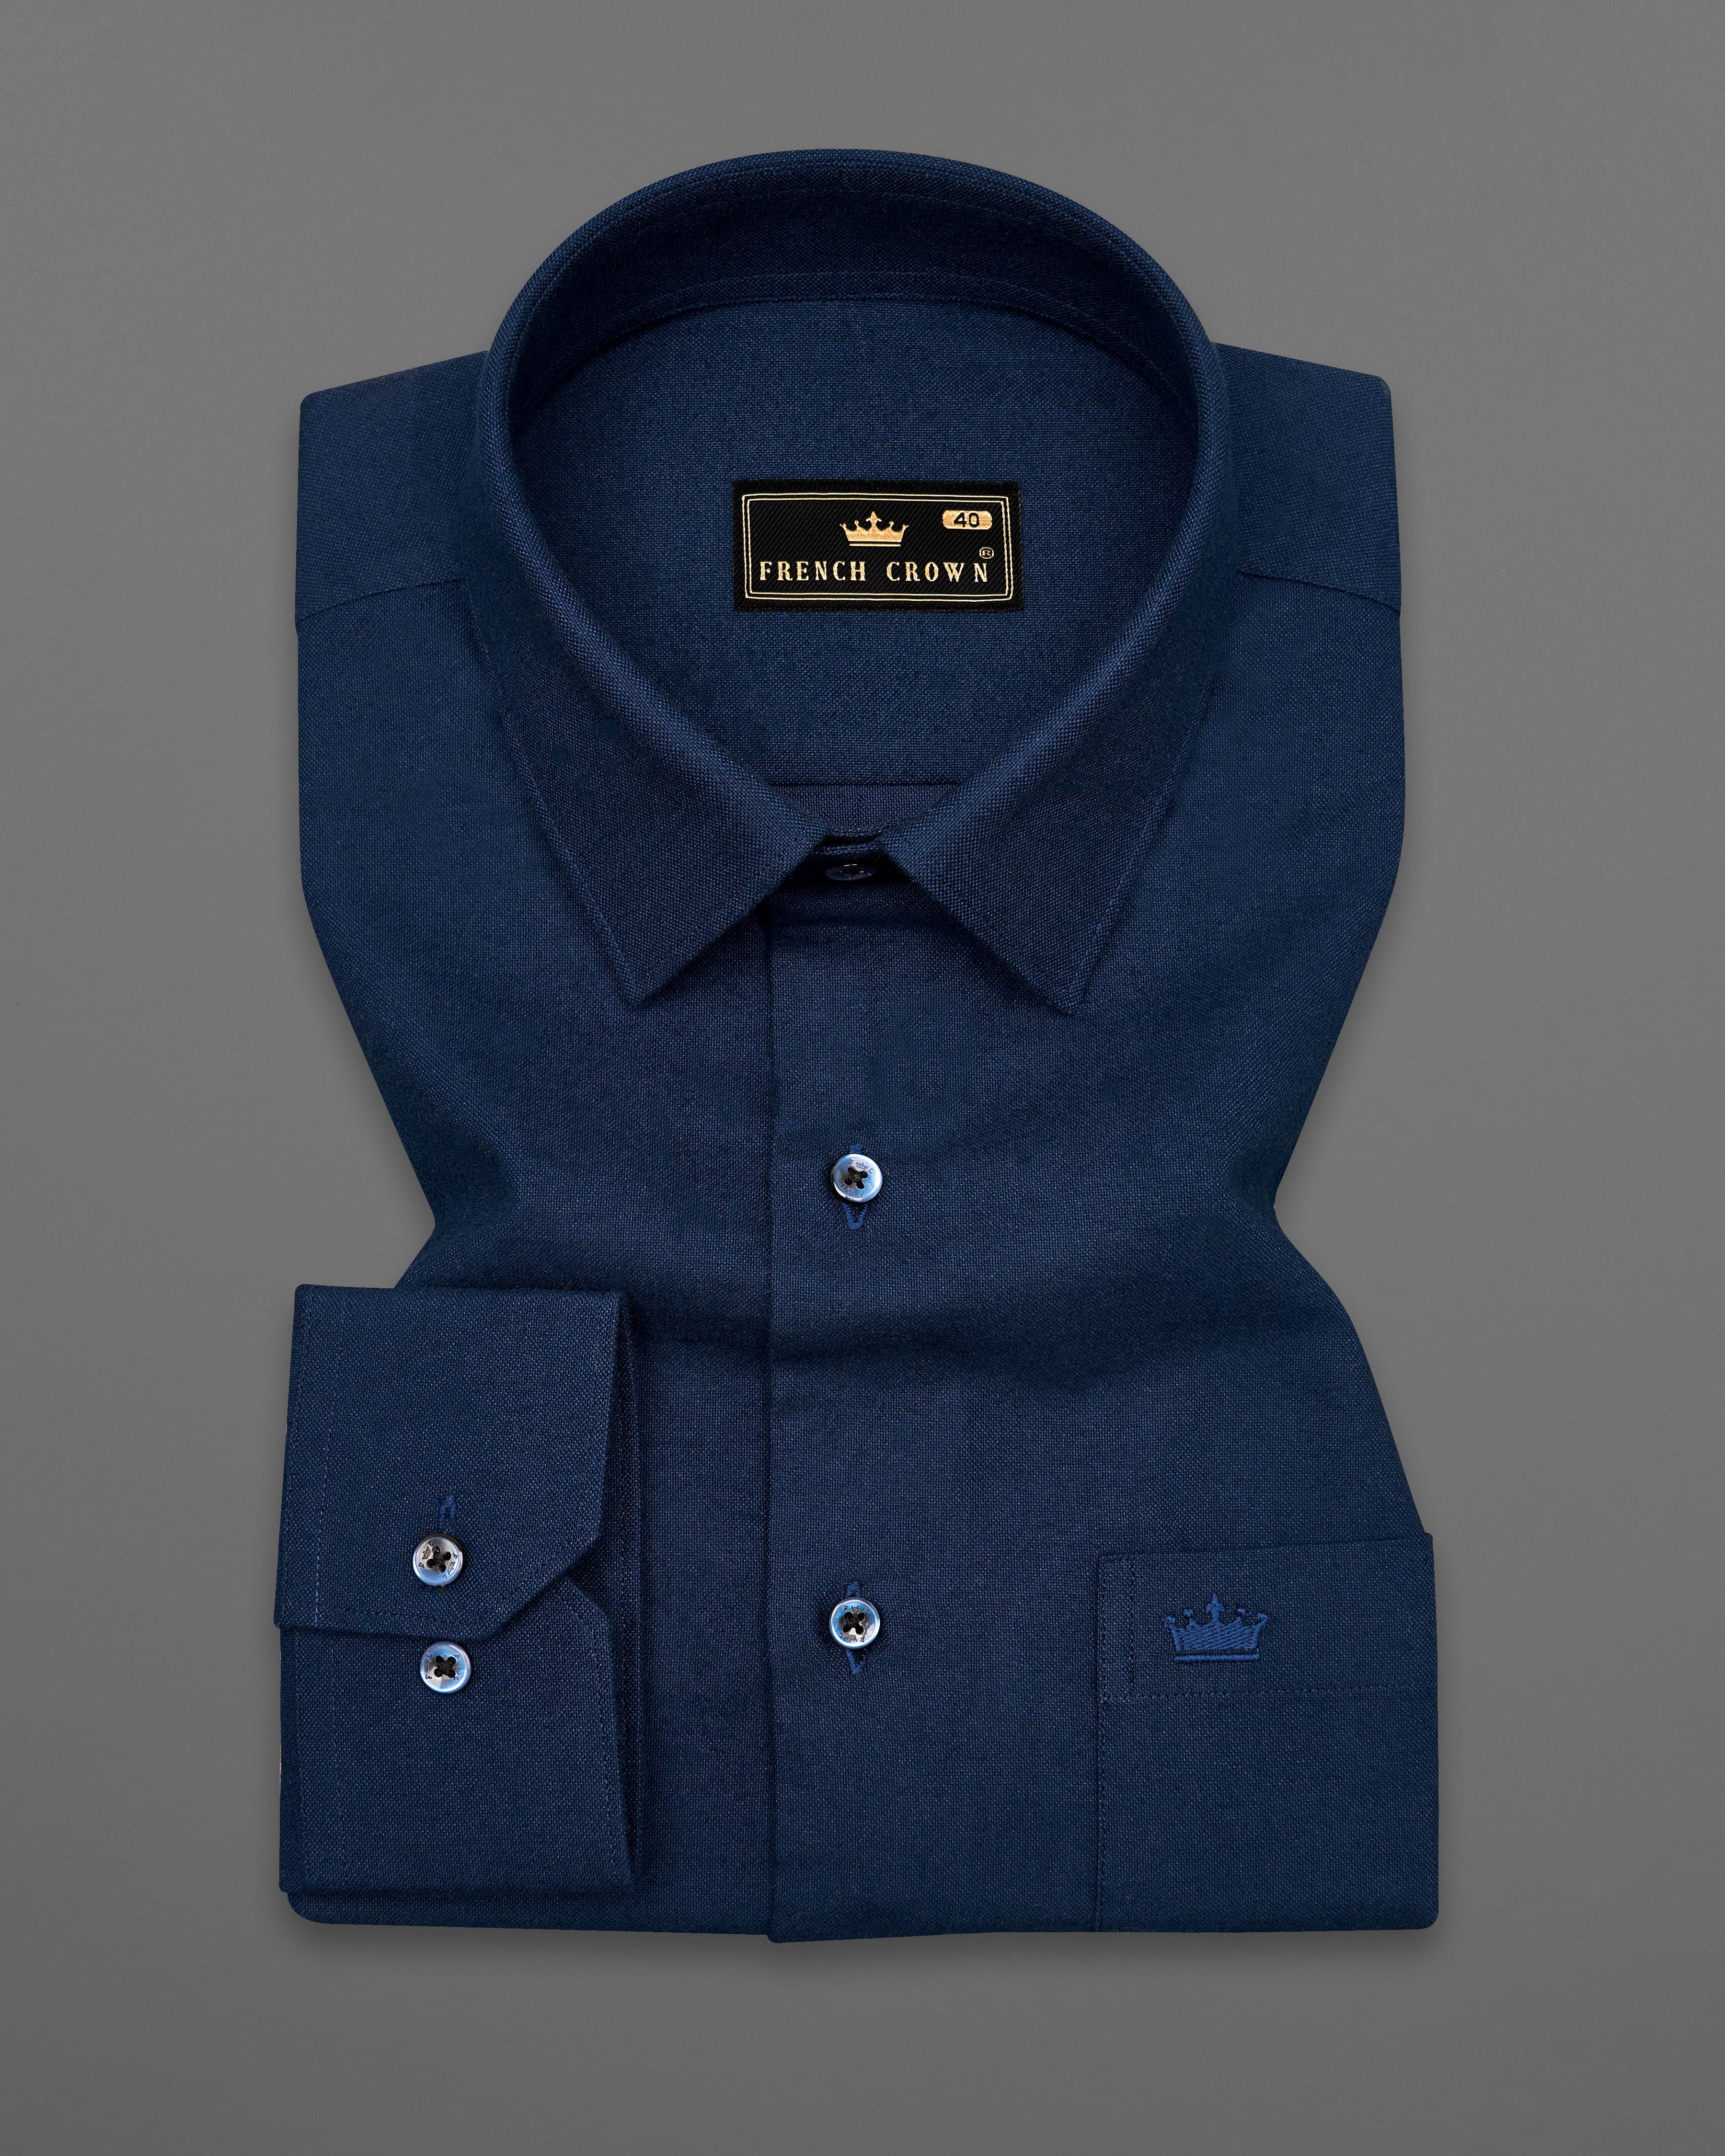 Firefly Navy Blue Royal Oxford Shirt